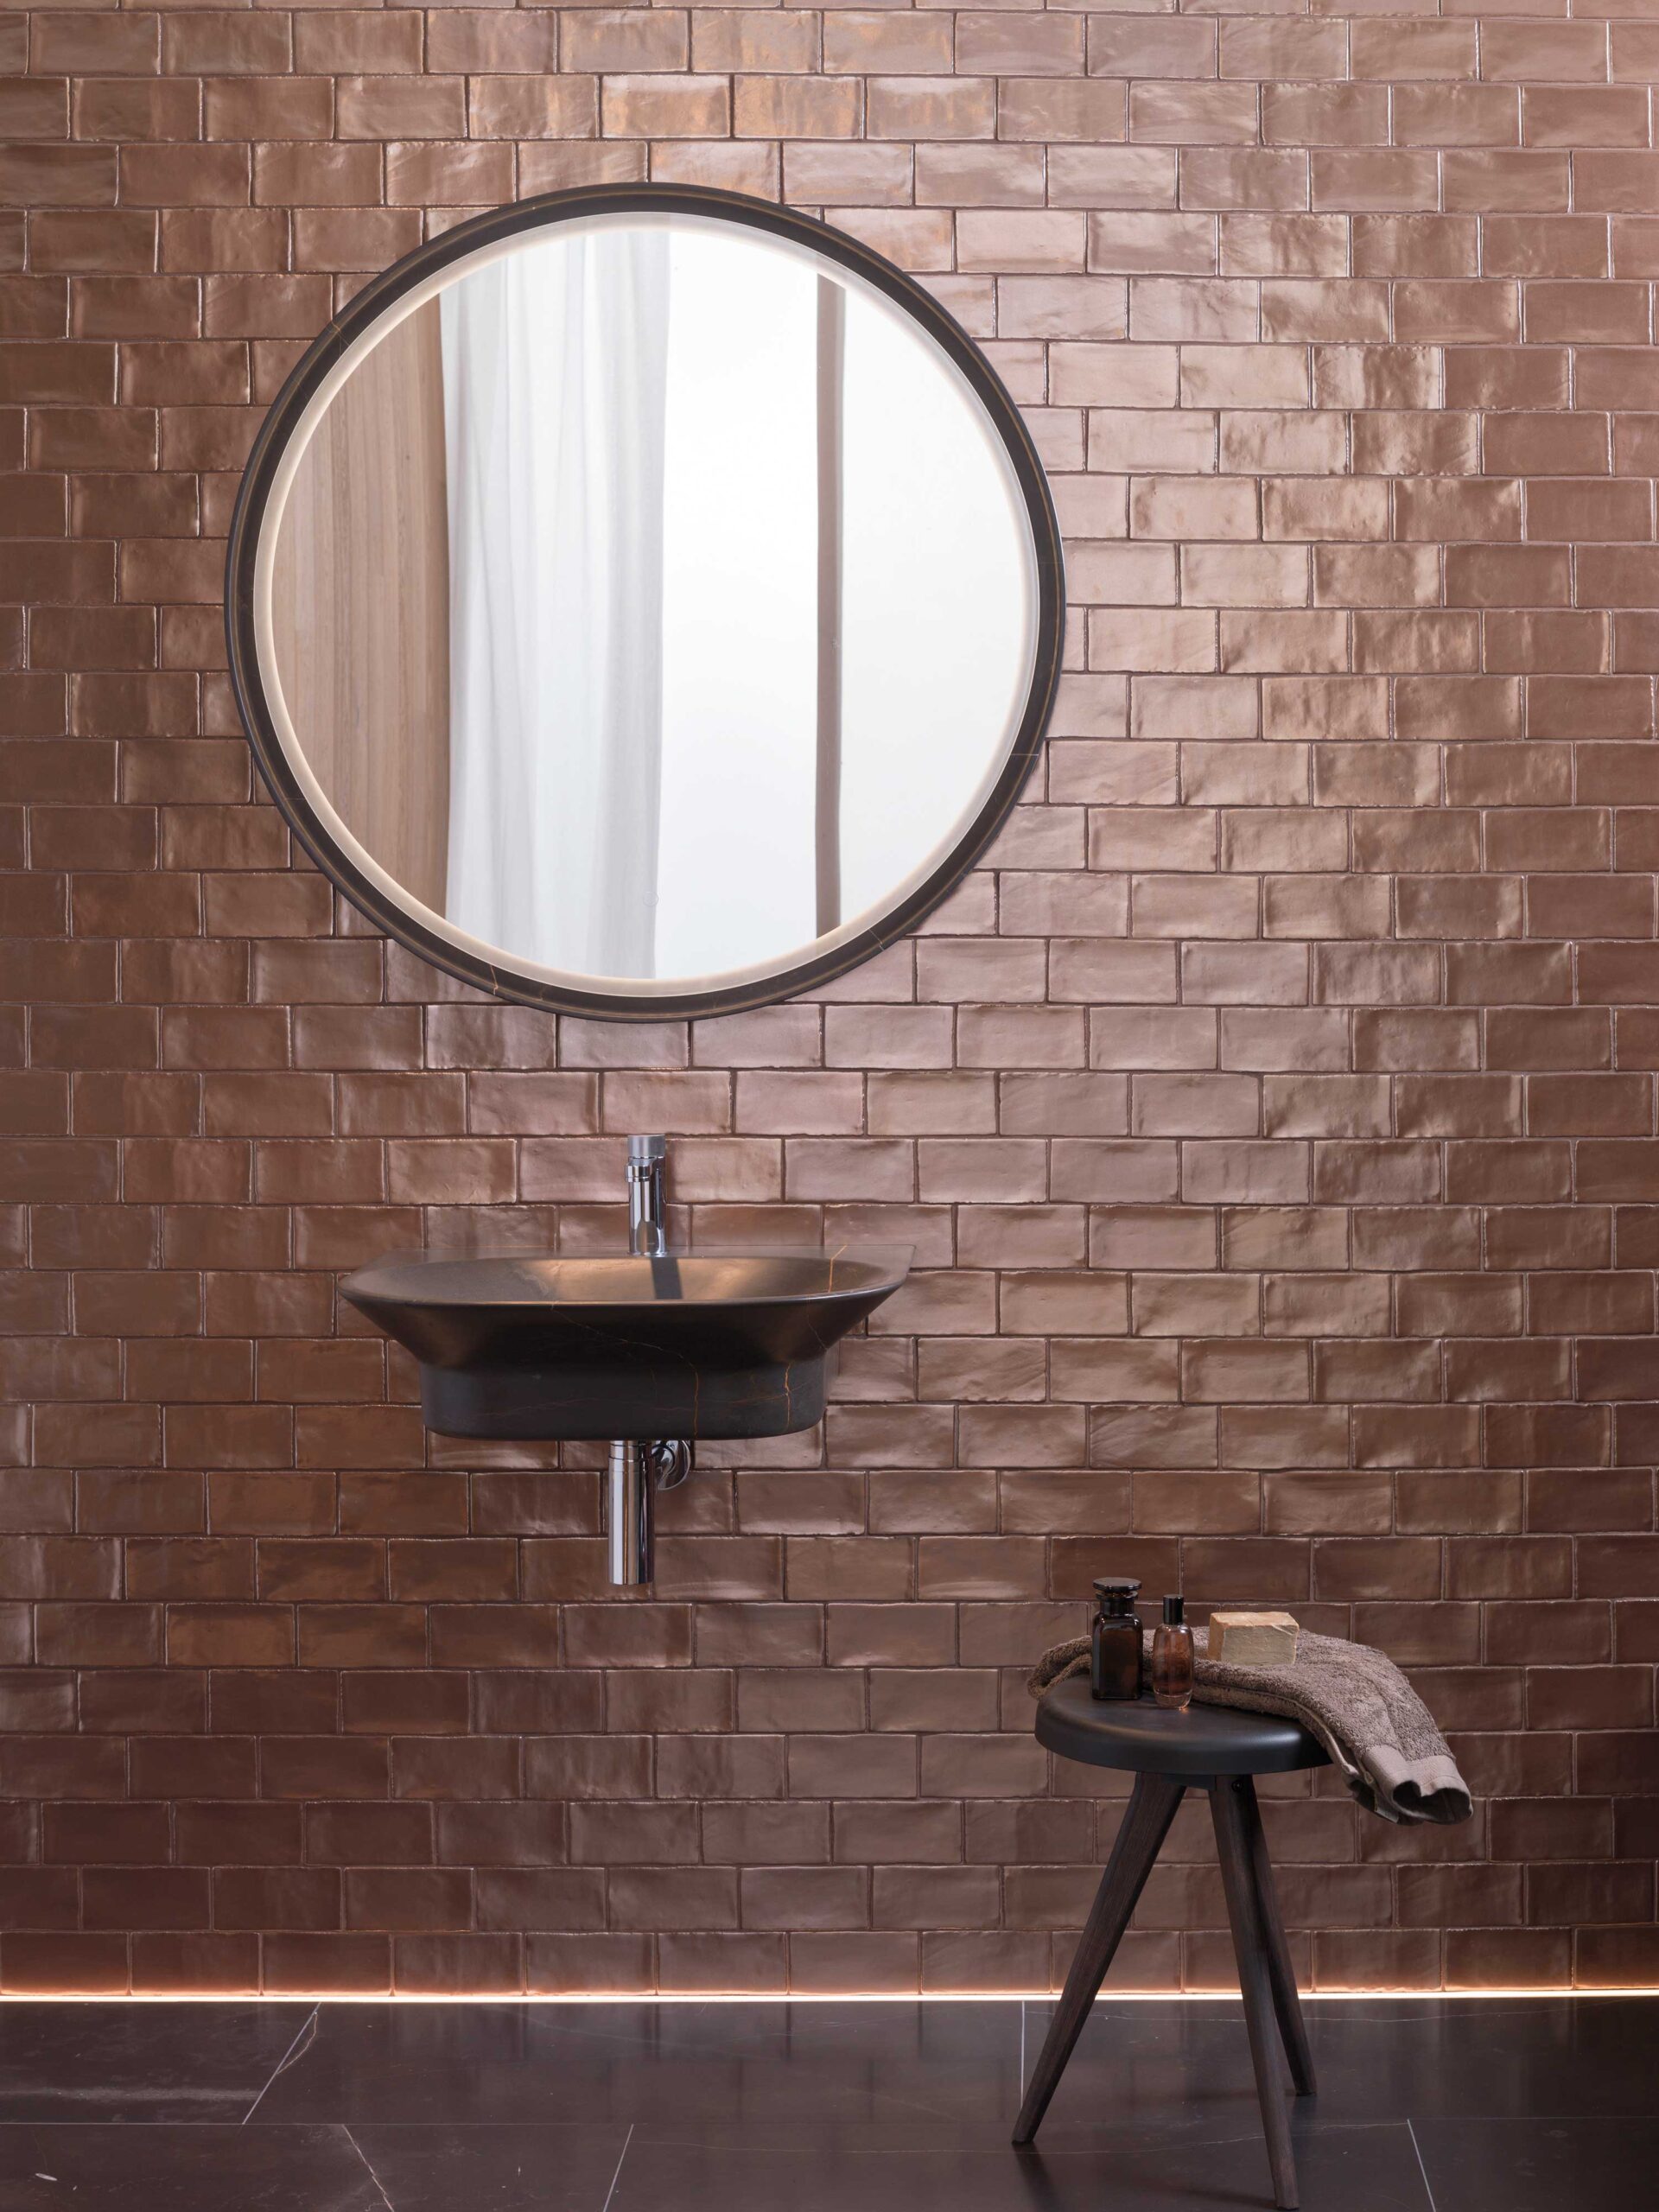 copper colored bathroom wall tile